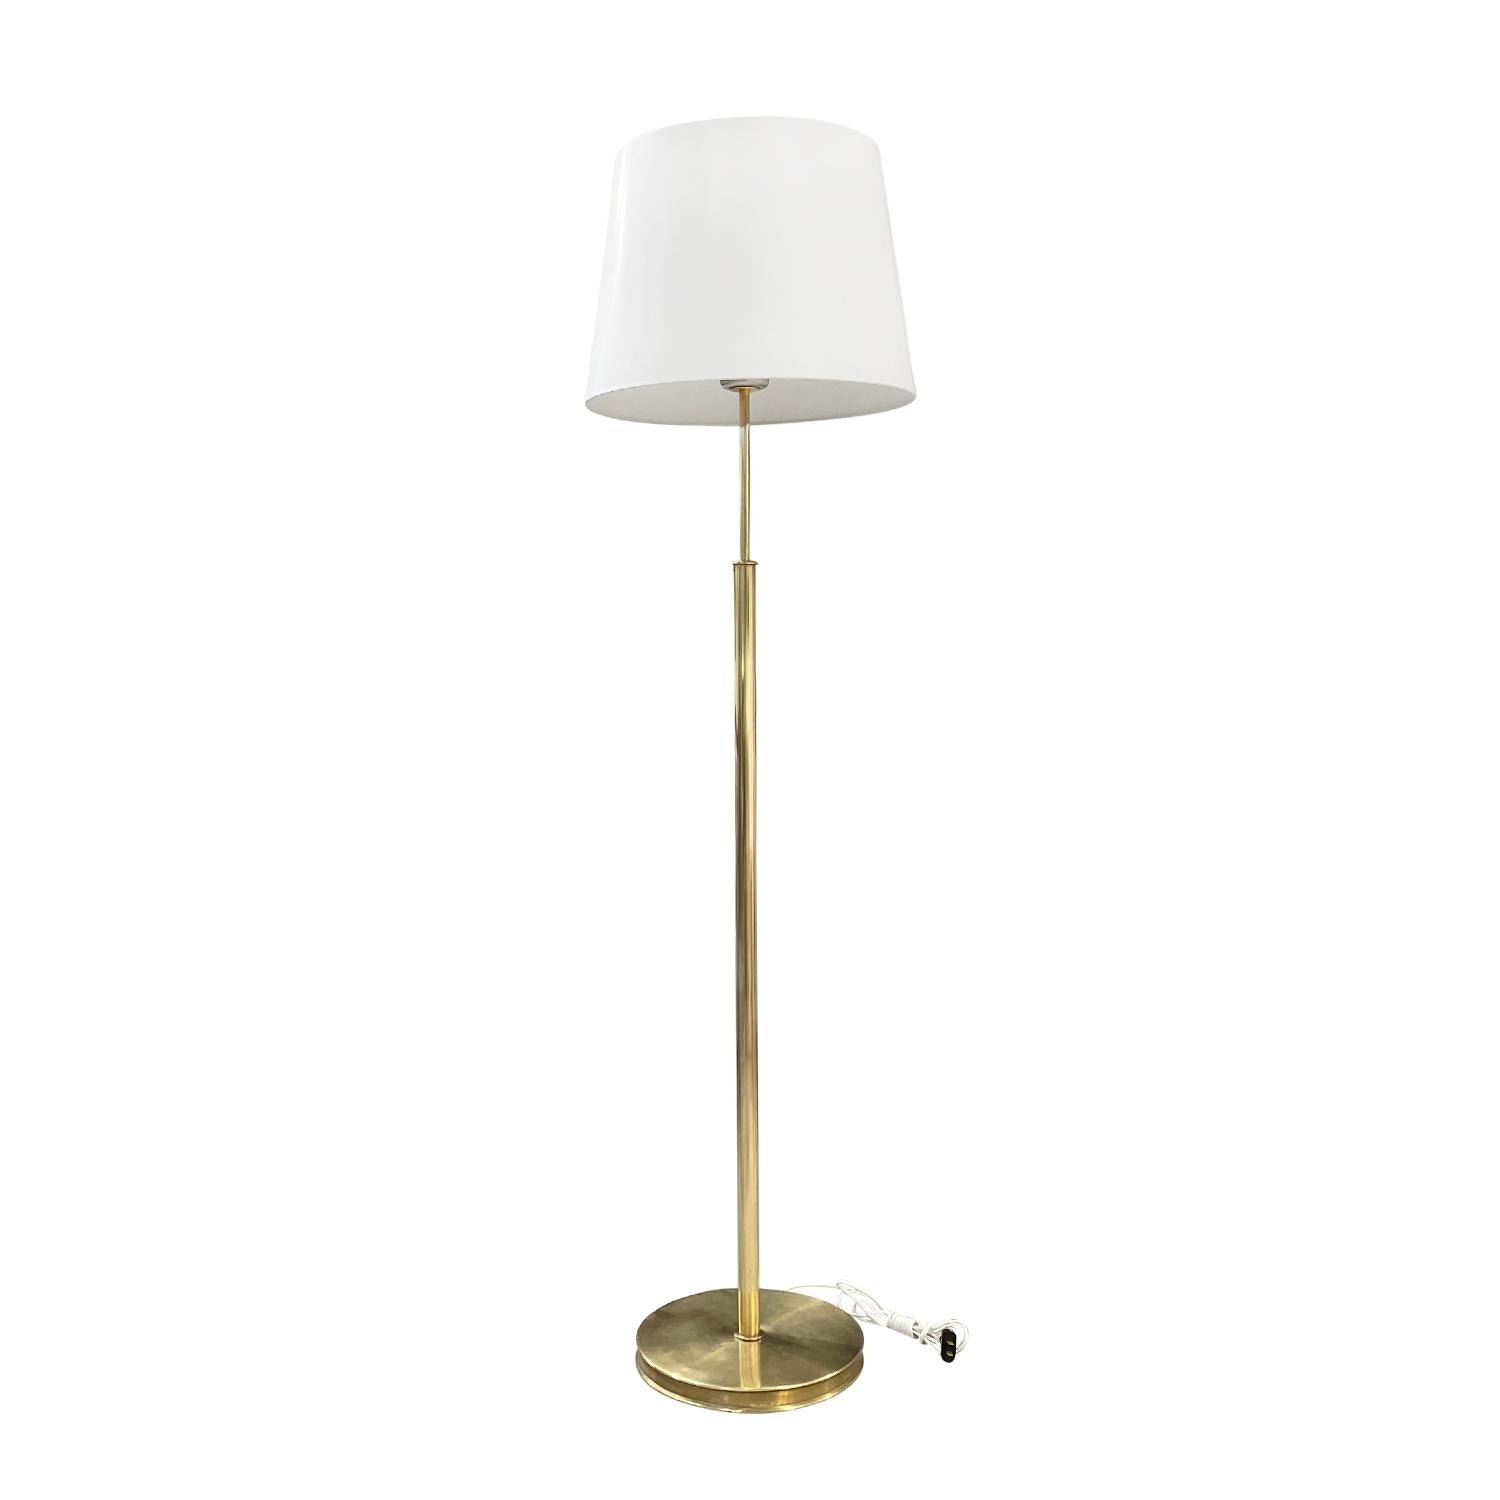 Mid-Century Modern 20th Century Swedish Svenskt Tenn Brass Floor Lamp, Vintage Light by Josef Frank For Sale